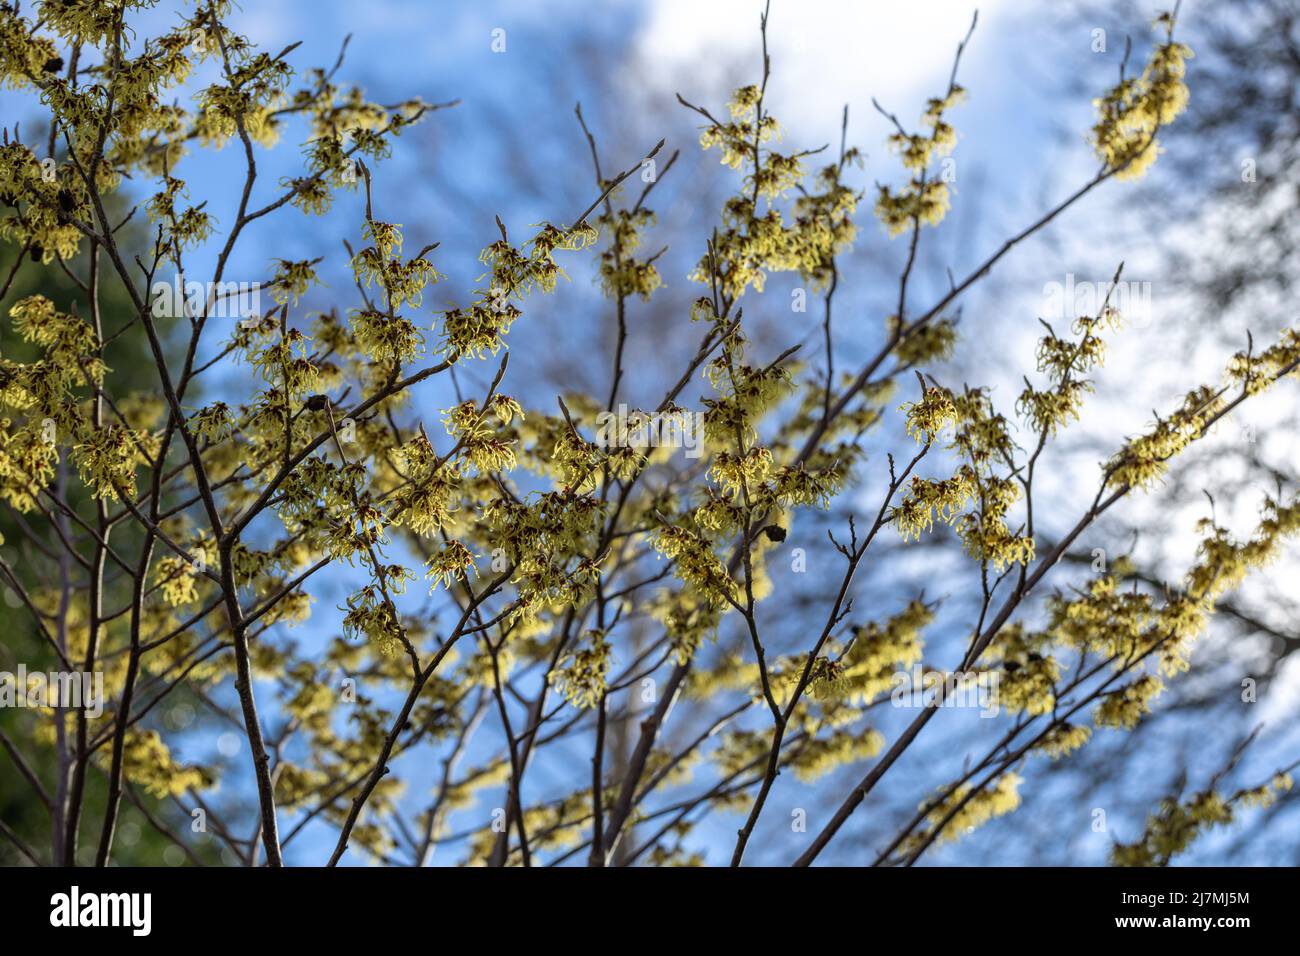 Vibrant yellow flowering stems of Hamamelis x intermedia 'Arnold Promise' / witch hazel, late winter Stock Photo